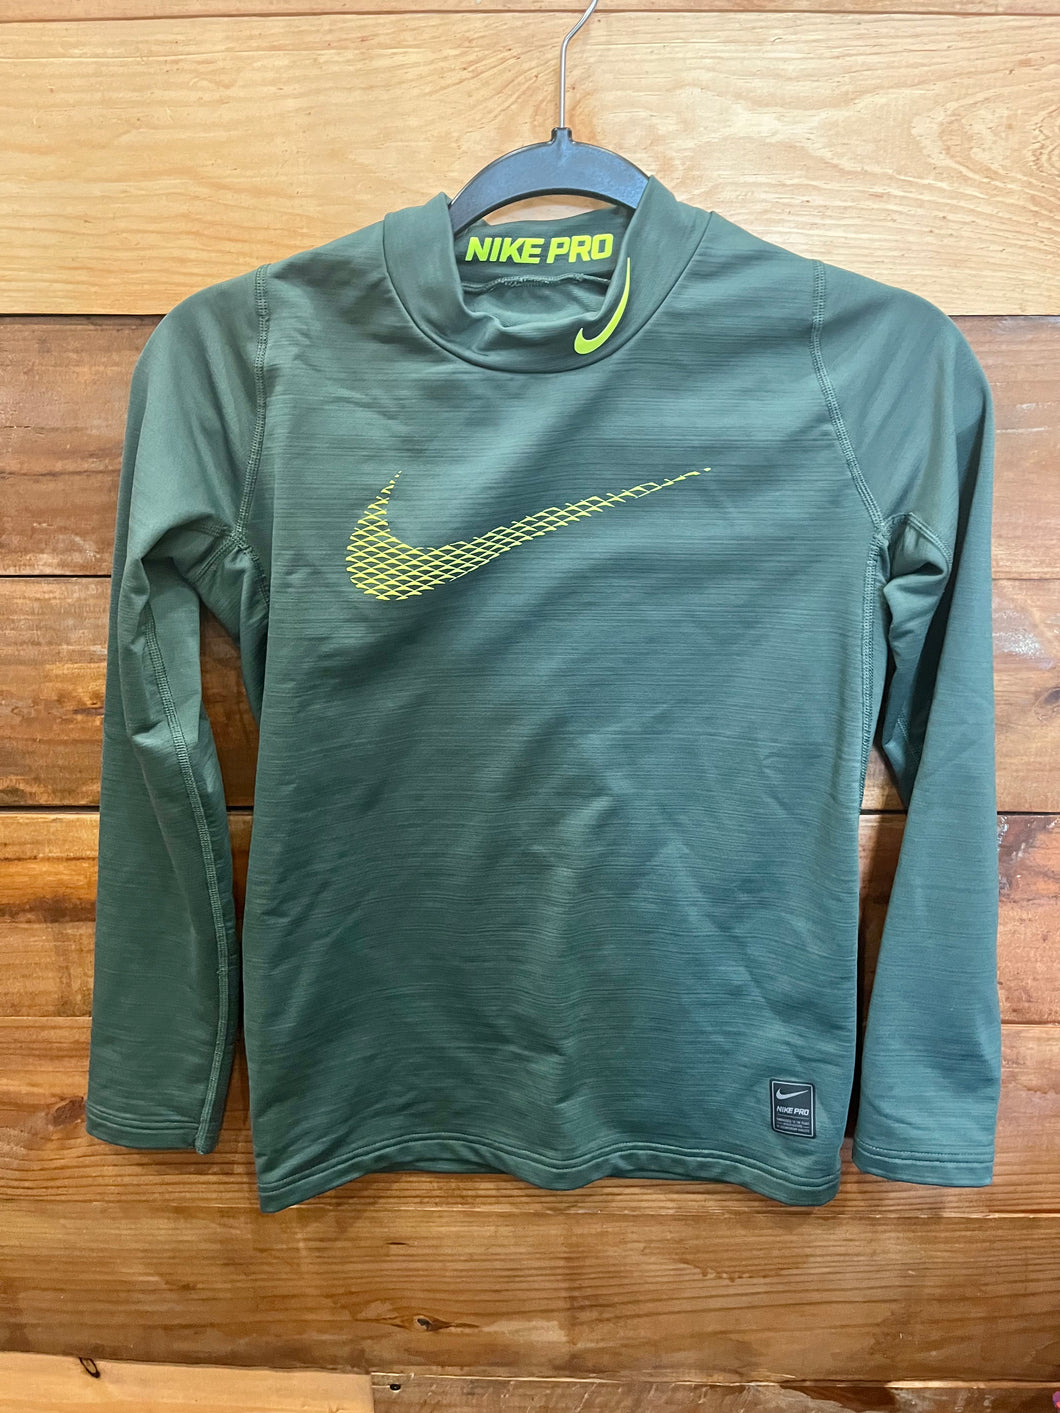 Nike Pro Green Shirt Size XL